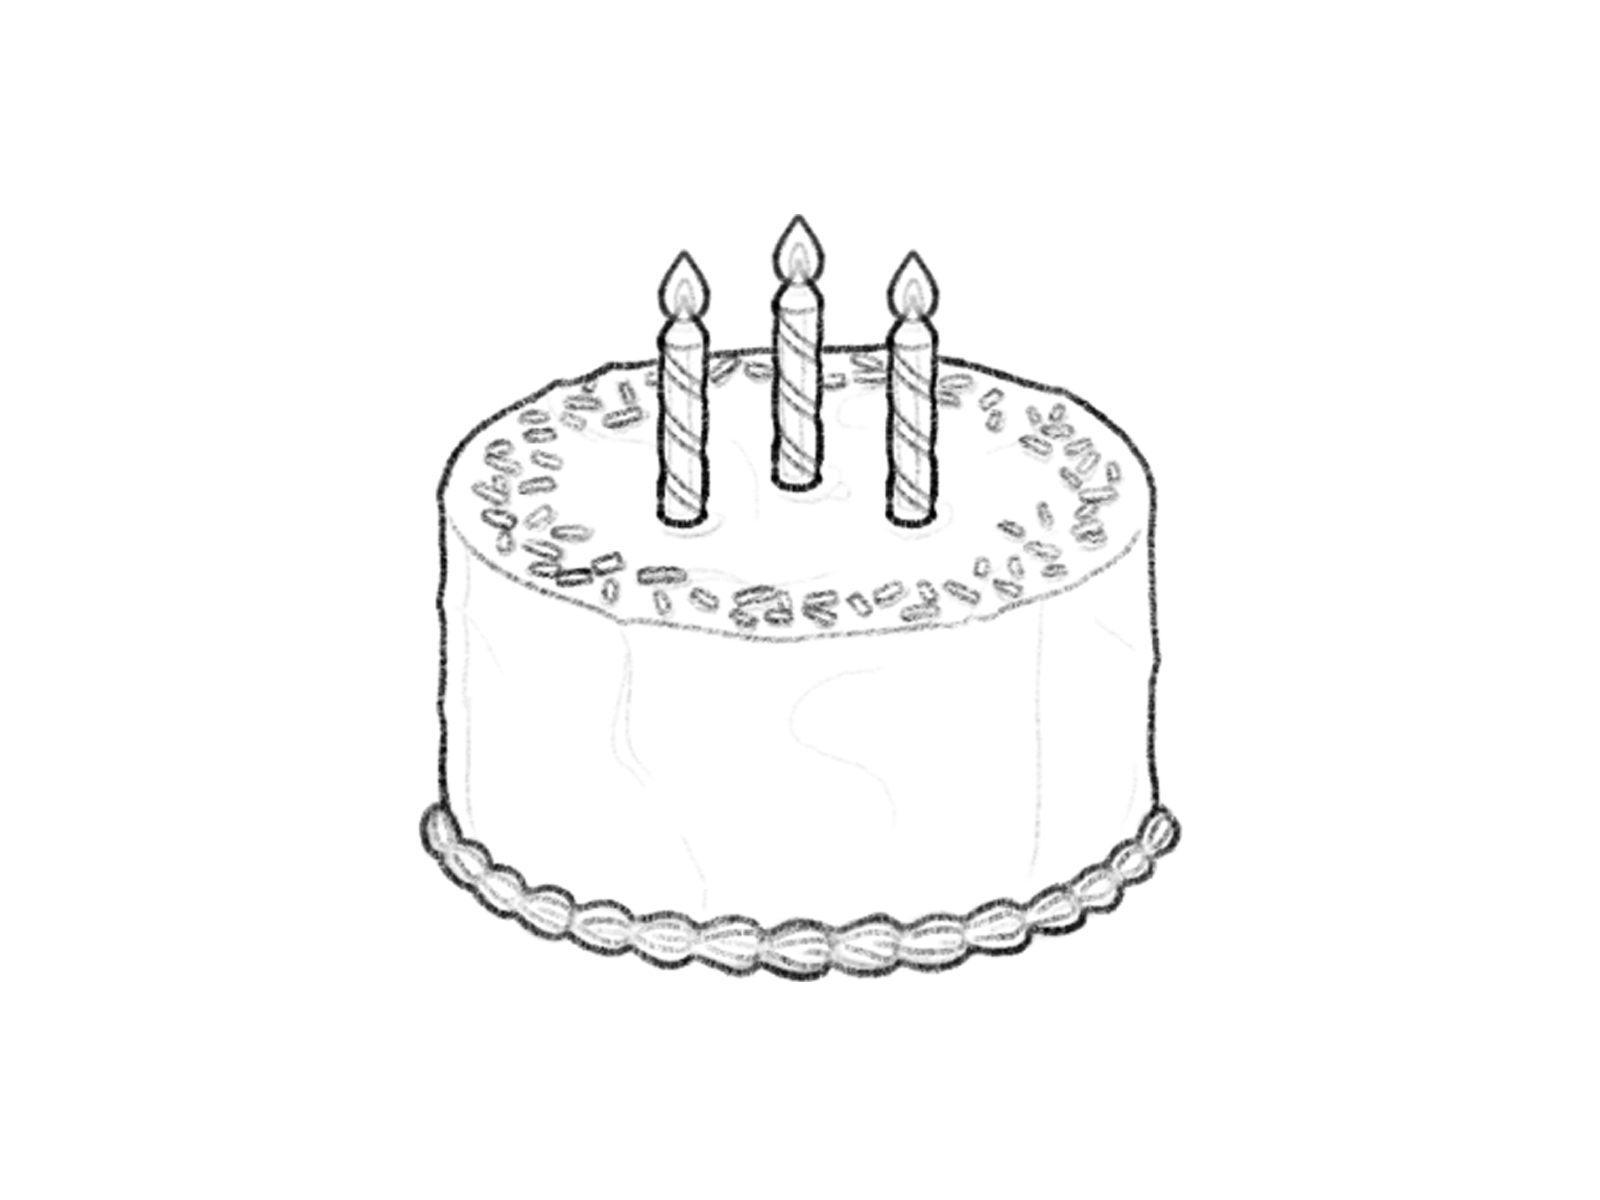 How To Draw a Birthday Cake